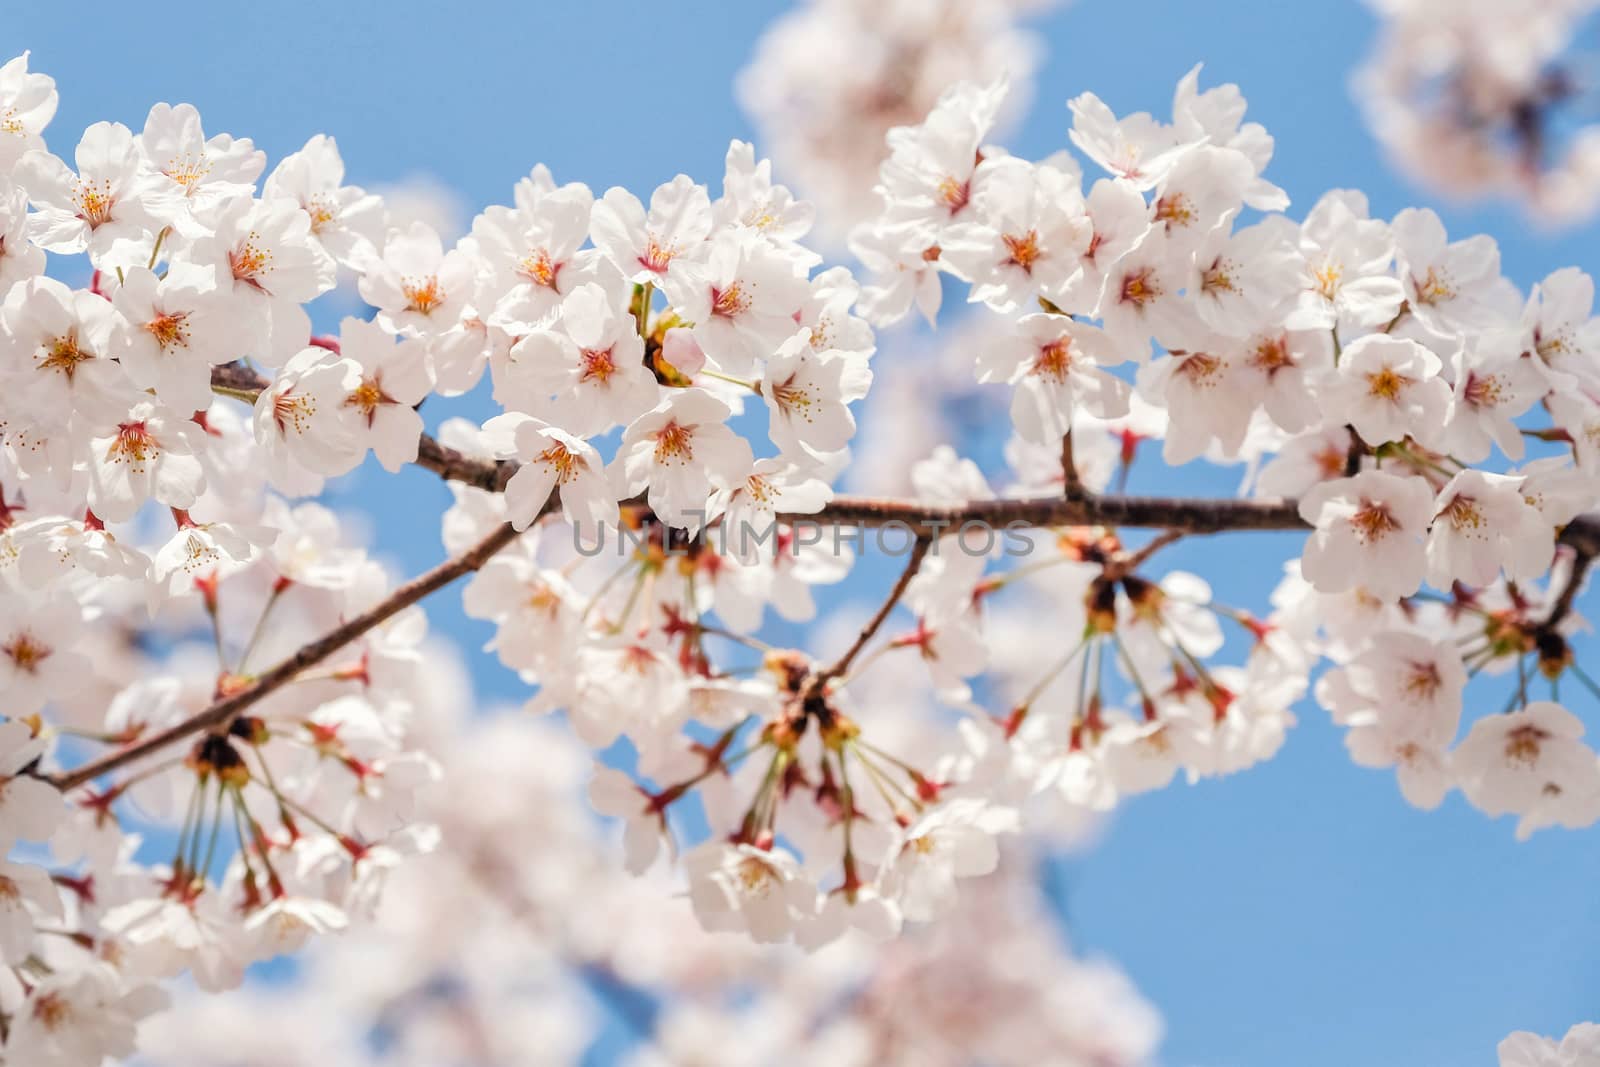 Beautiful blooming cherry blossom [sakura] detail and close up a by Surasak